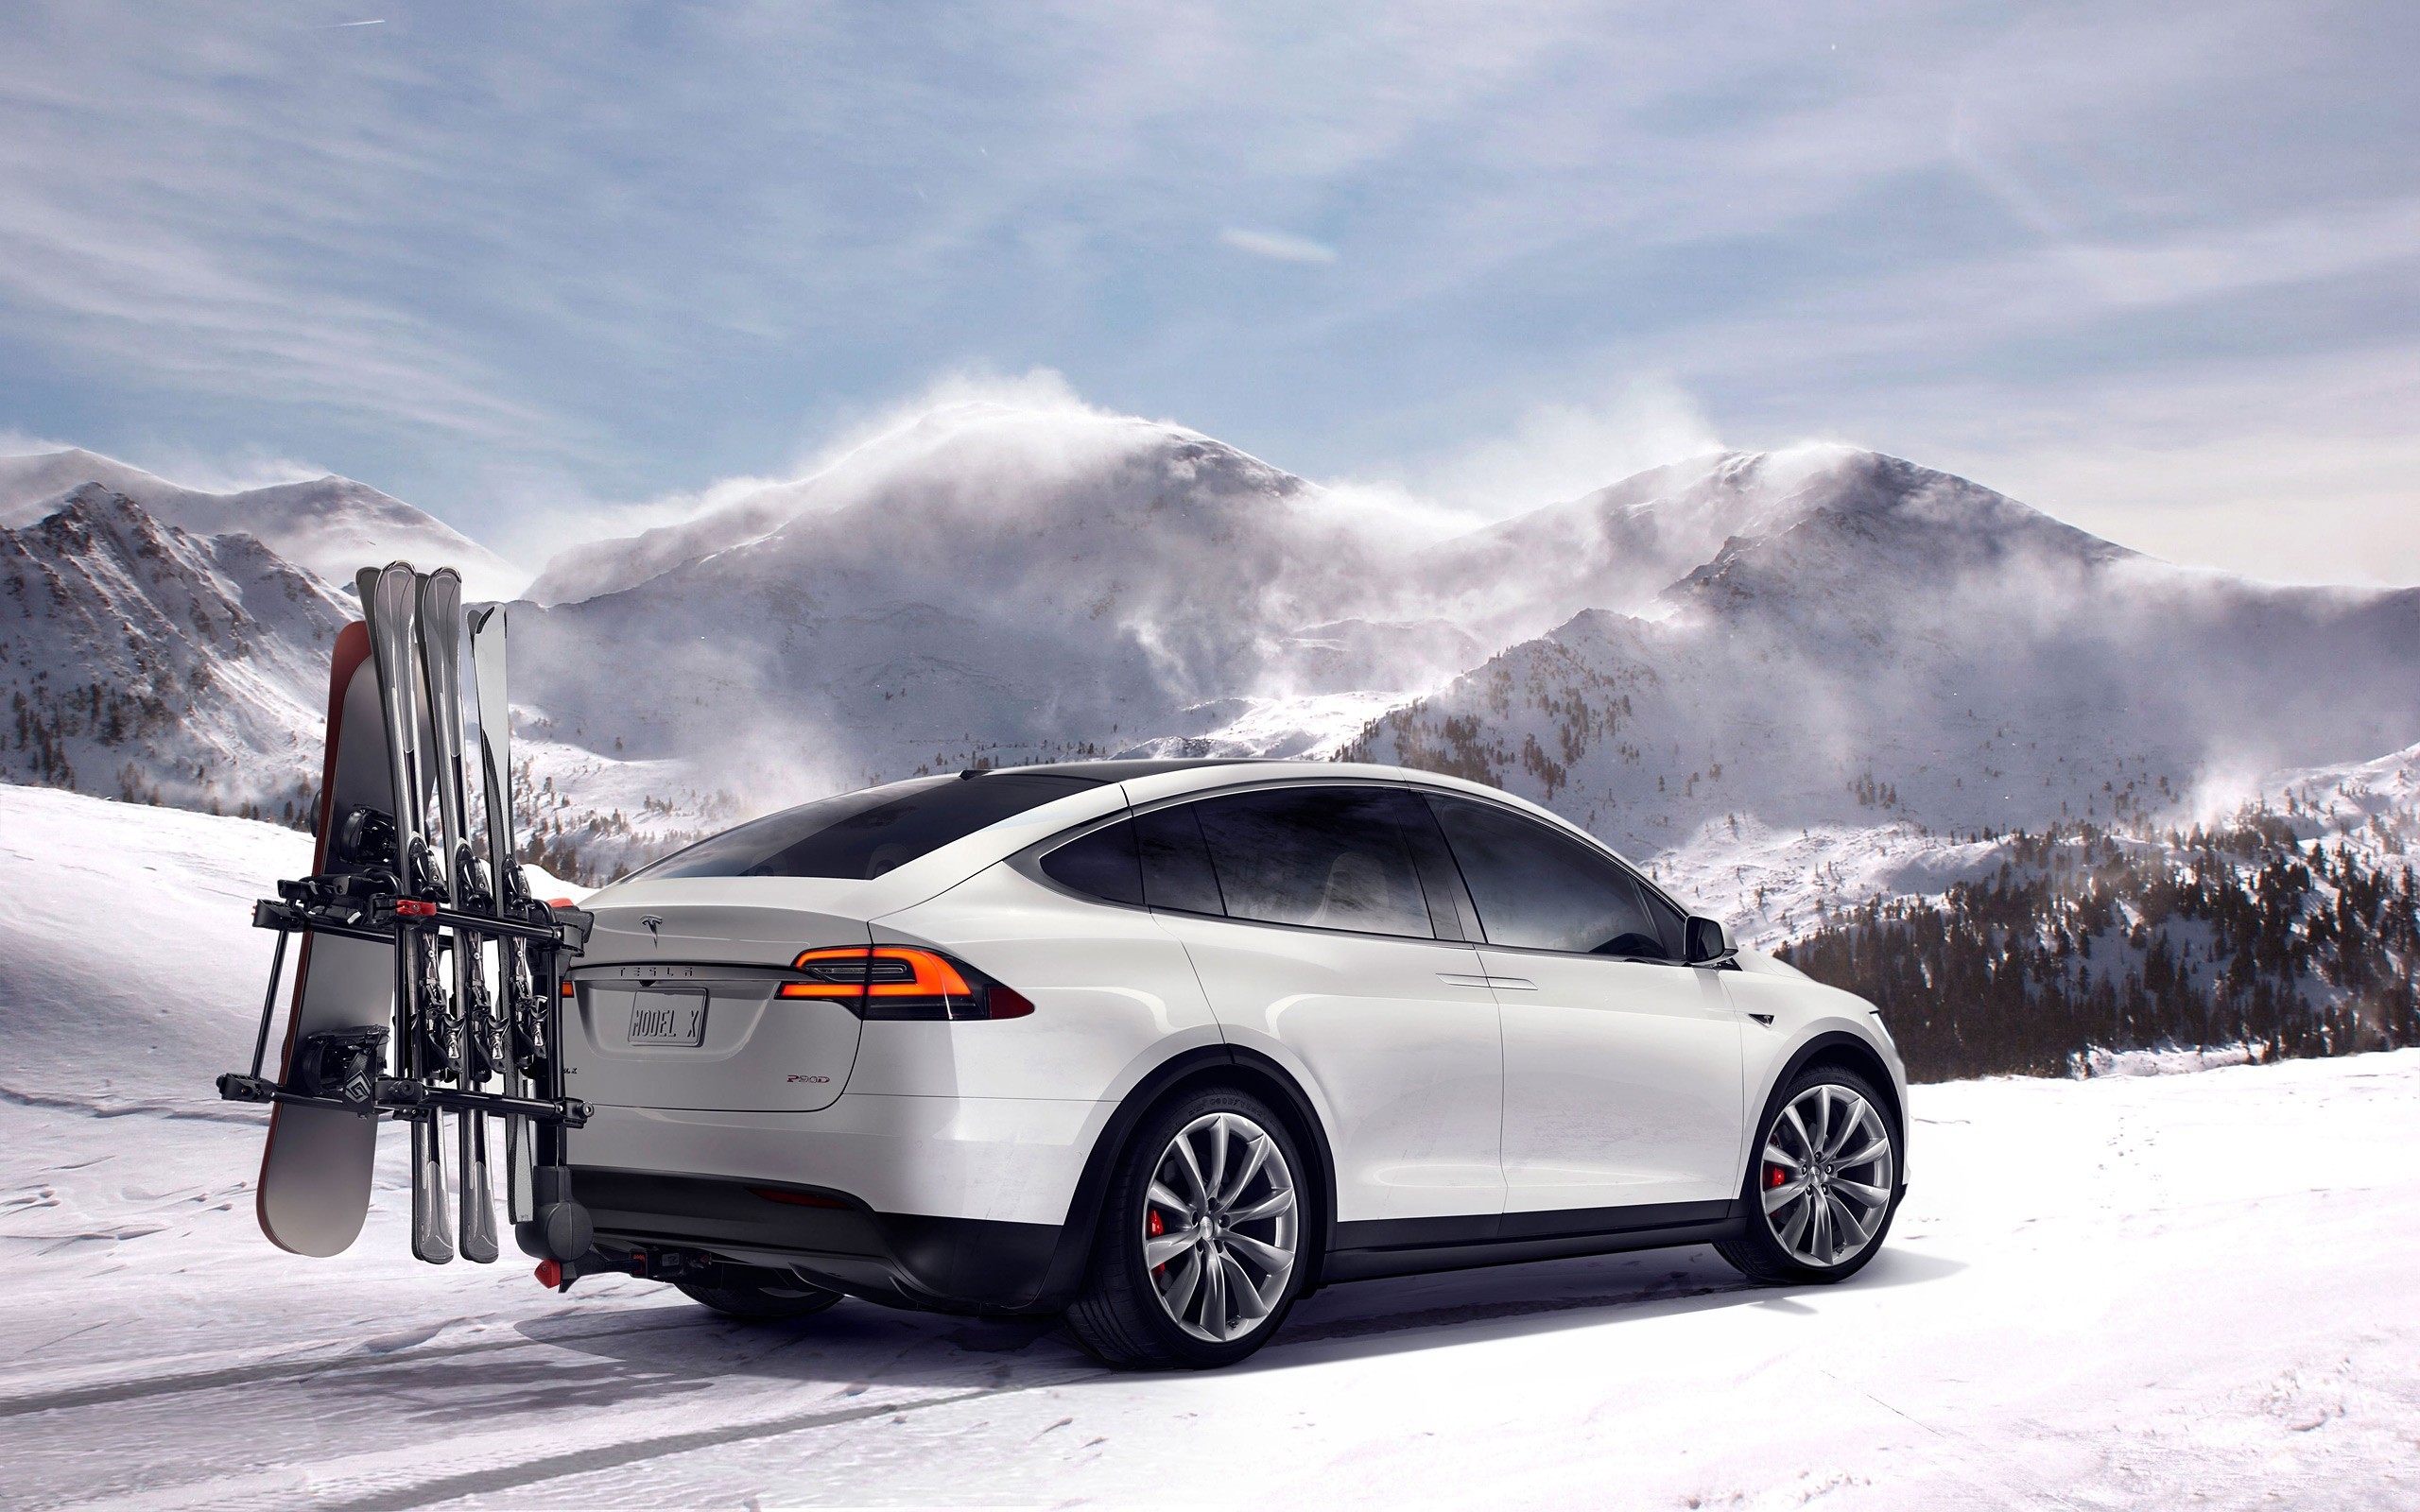 2560x1600 General  Tesla Model X car snow snowboards skis mountains Tesla  Motors Elon Musk